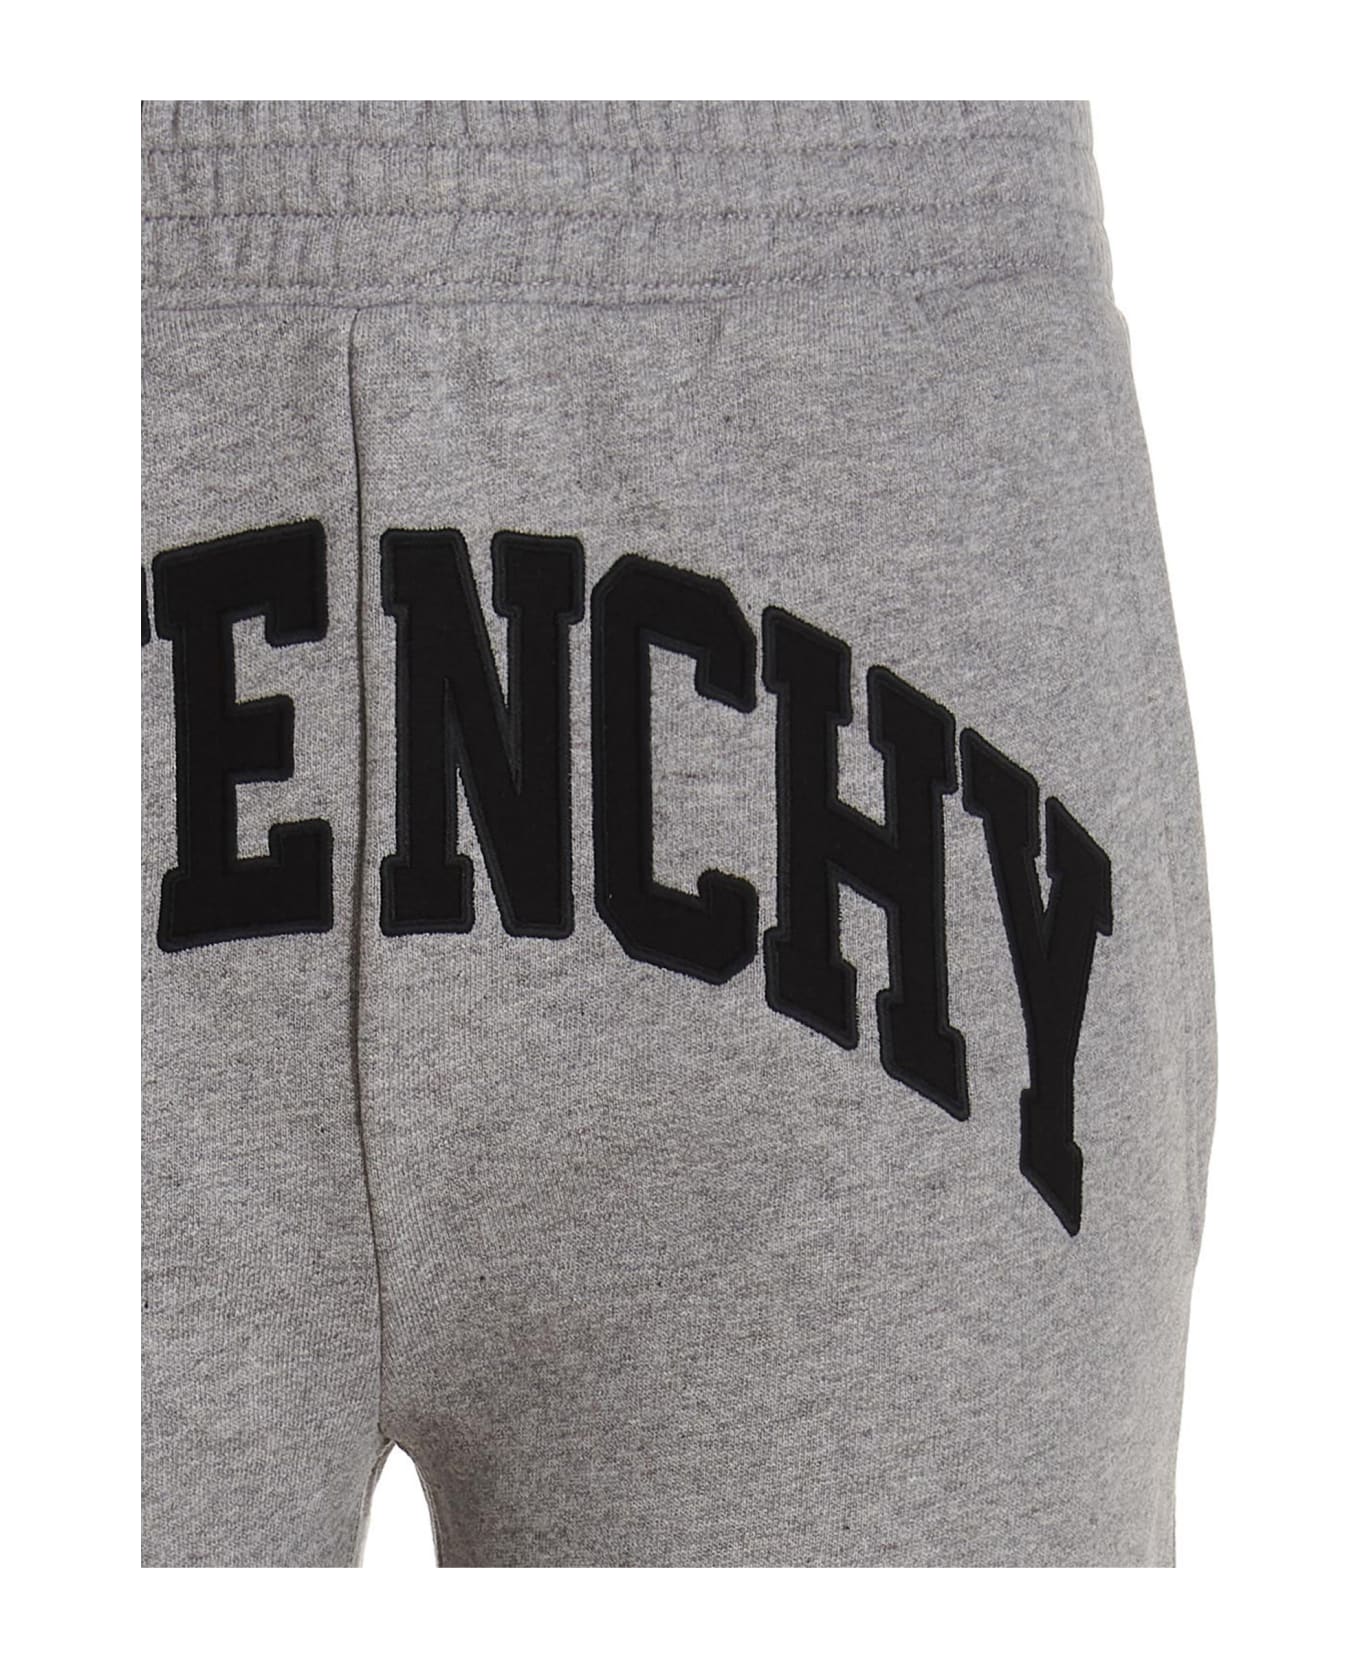 Givenchy Logo Embroidery Joggers - Gray